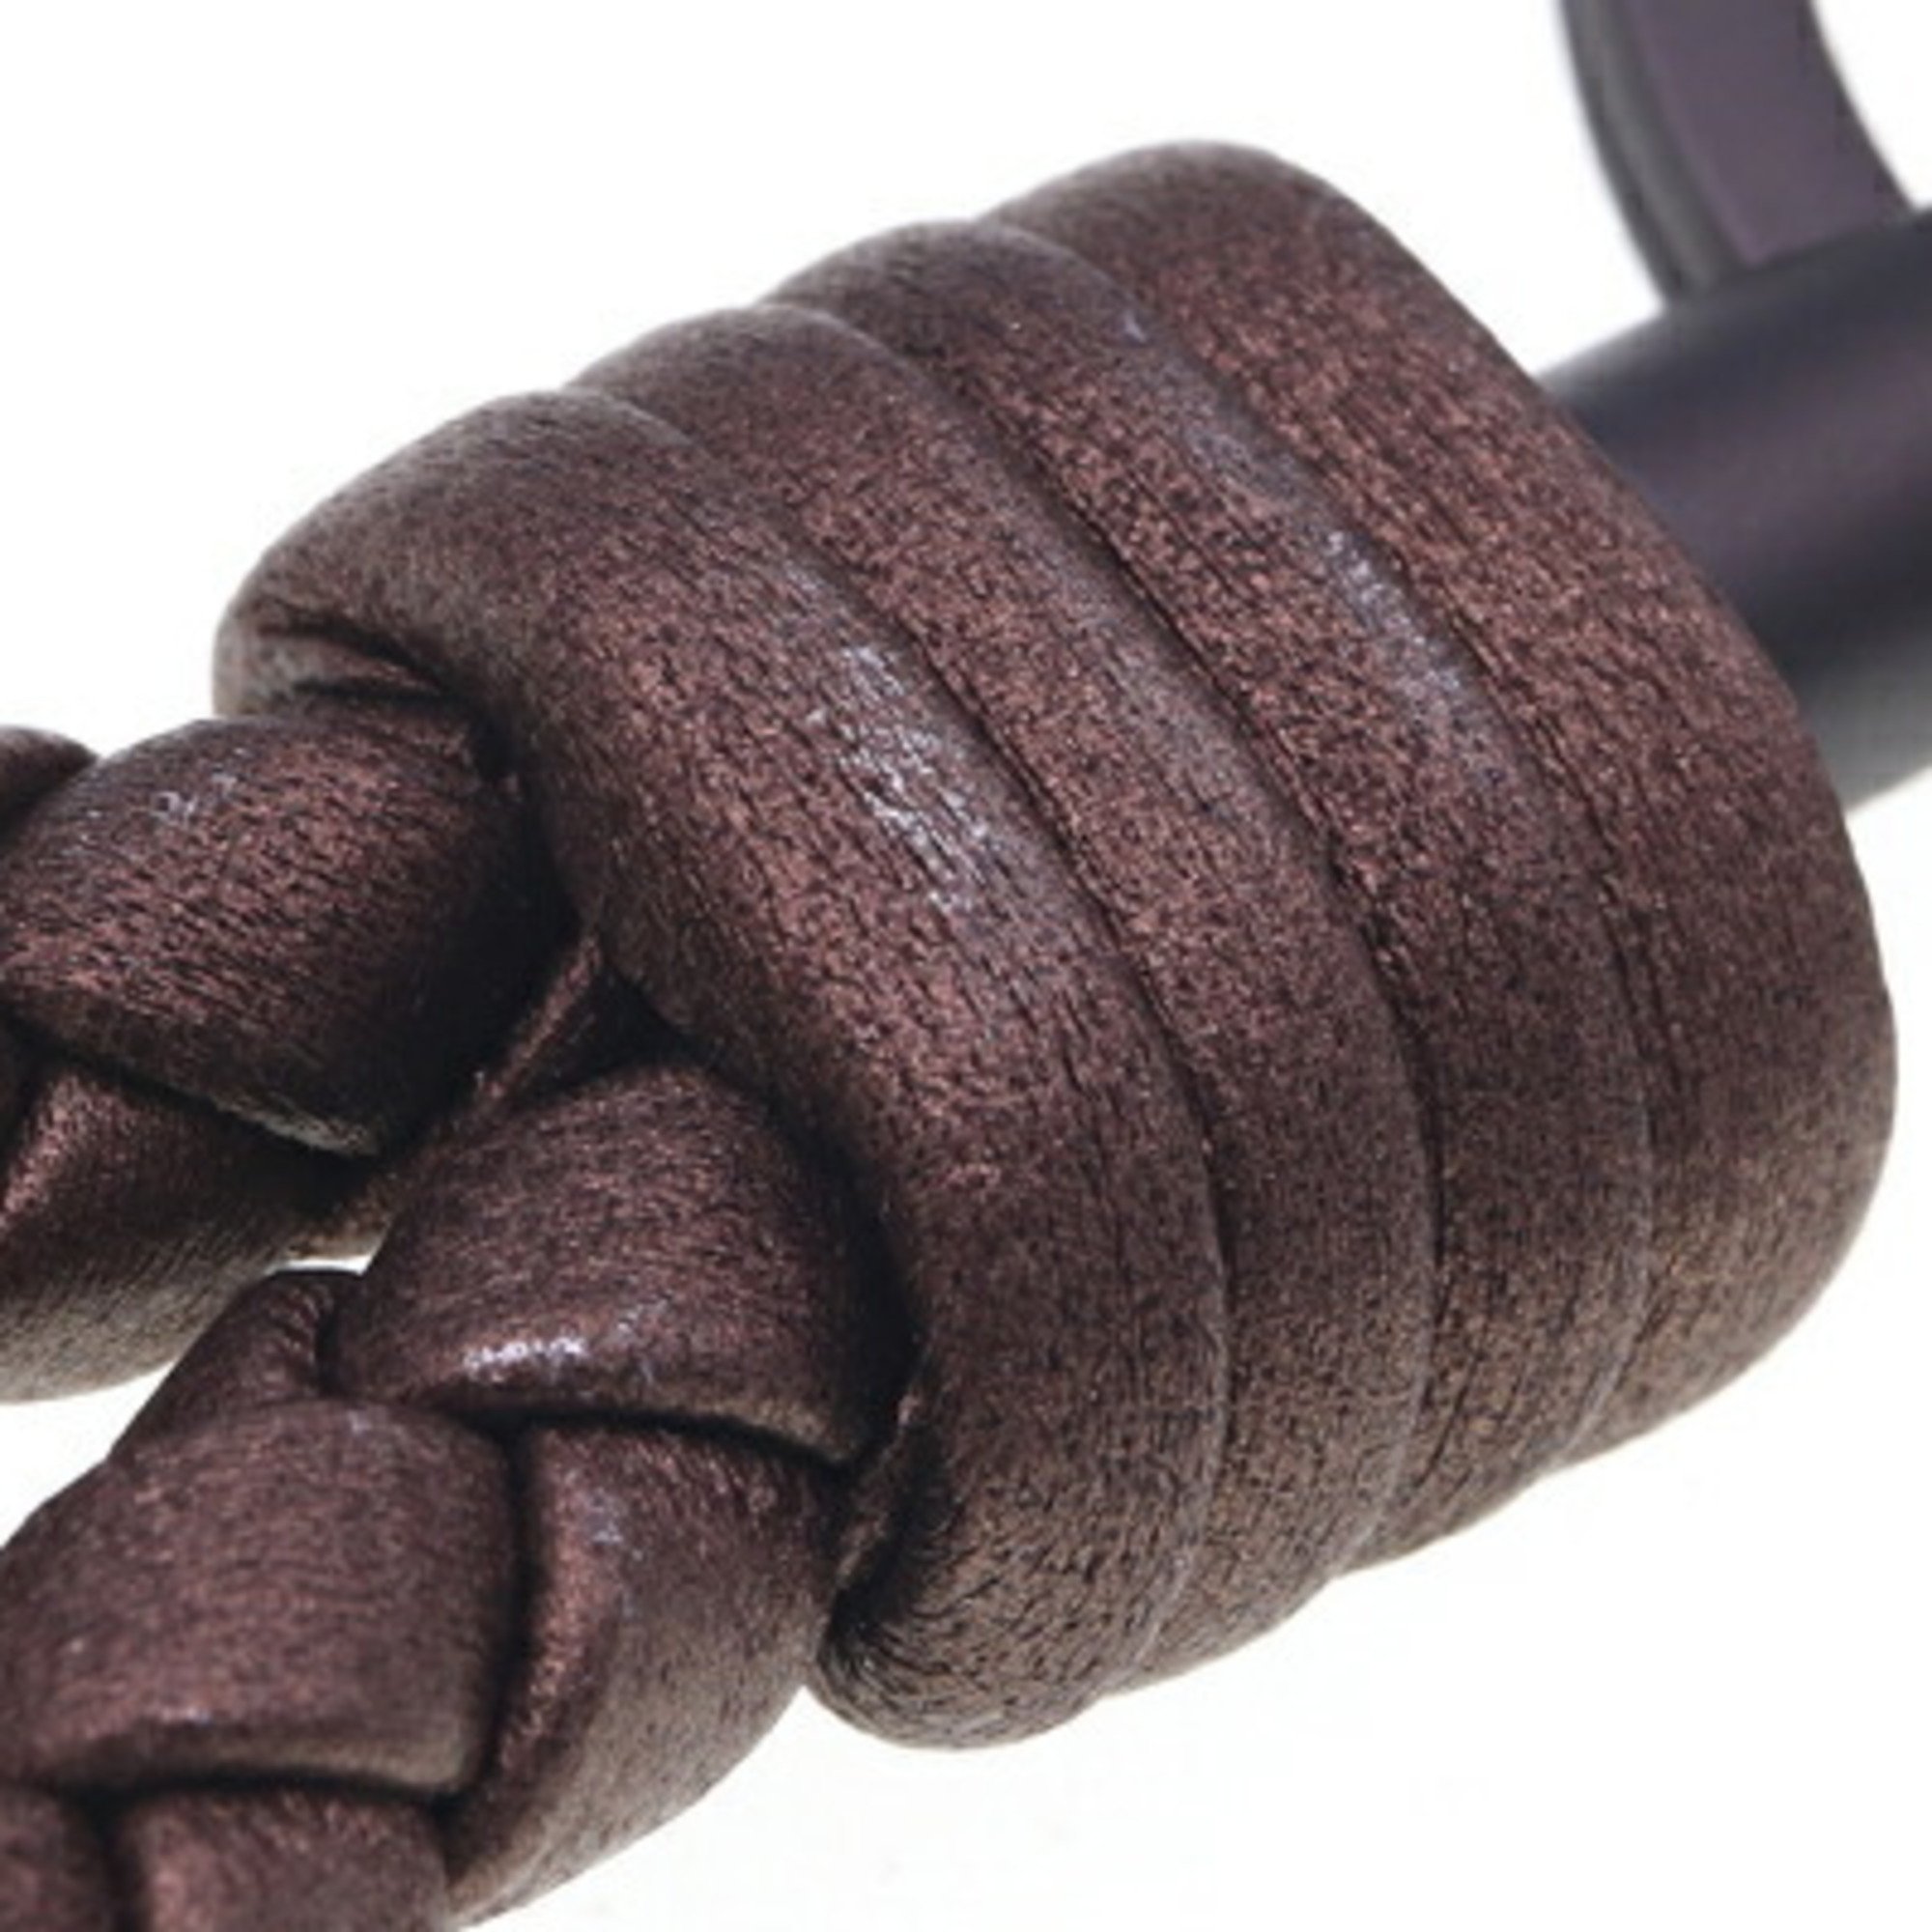 Bottega Veneta Key Ring Intrecciato 113539 Bronze Leather Holder Keys Women Men BOTTEGA VENETA